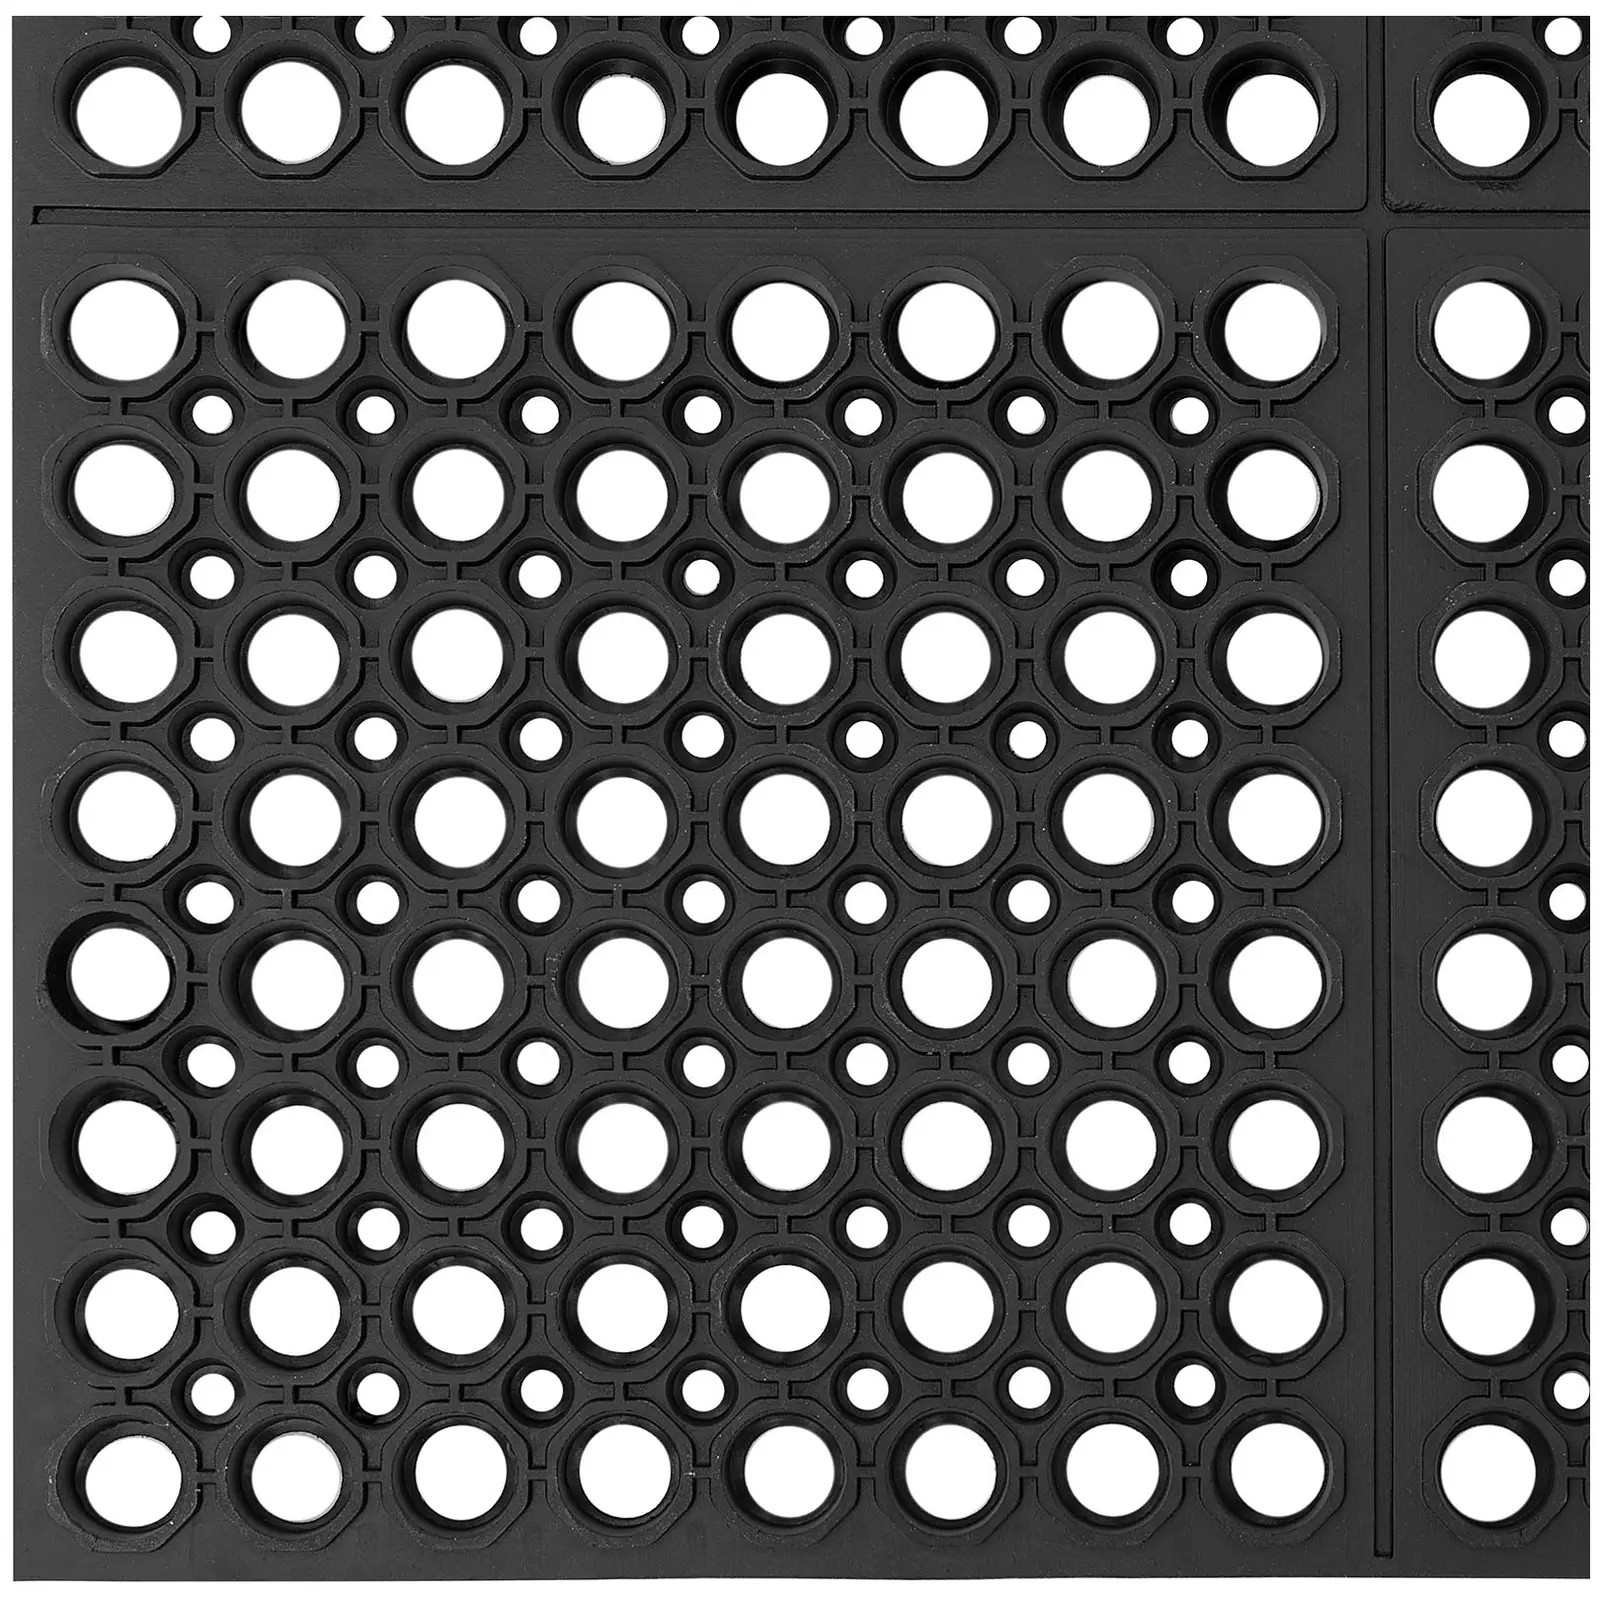 Rubber mat - 150 x 90 x 1 cm - black